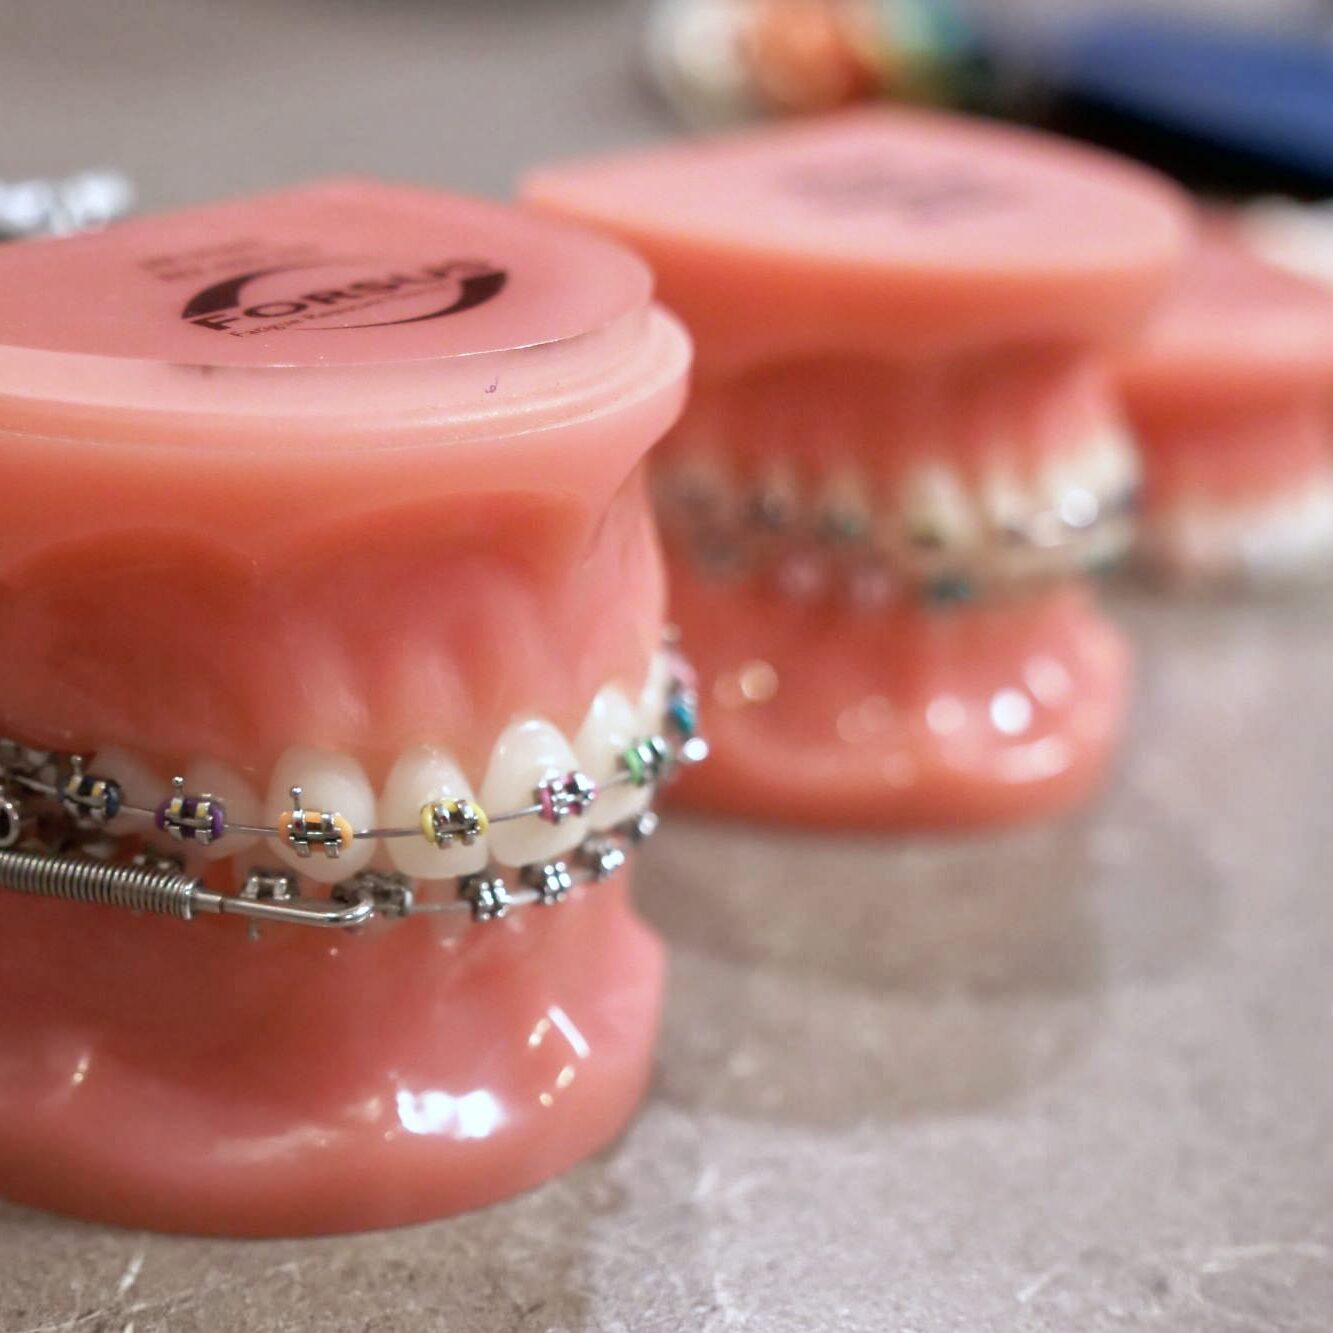 Teeth models with braces